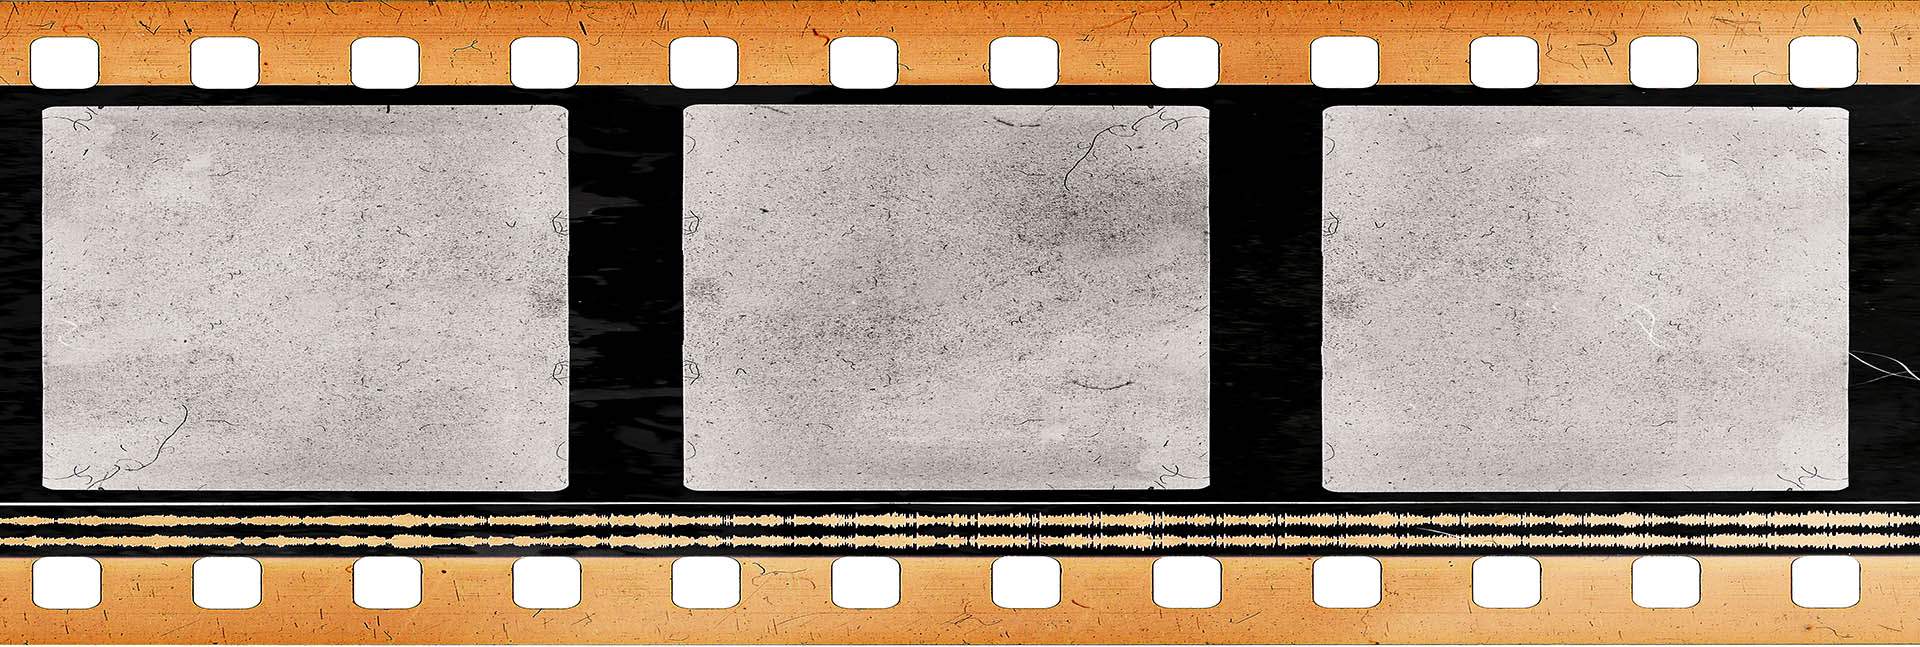 A stretch of film. Image: Shutterstock